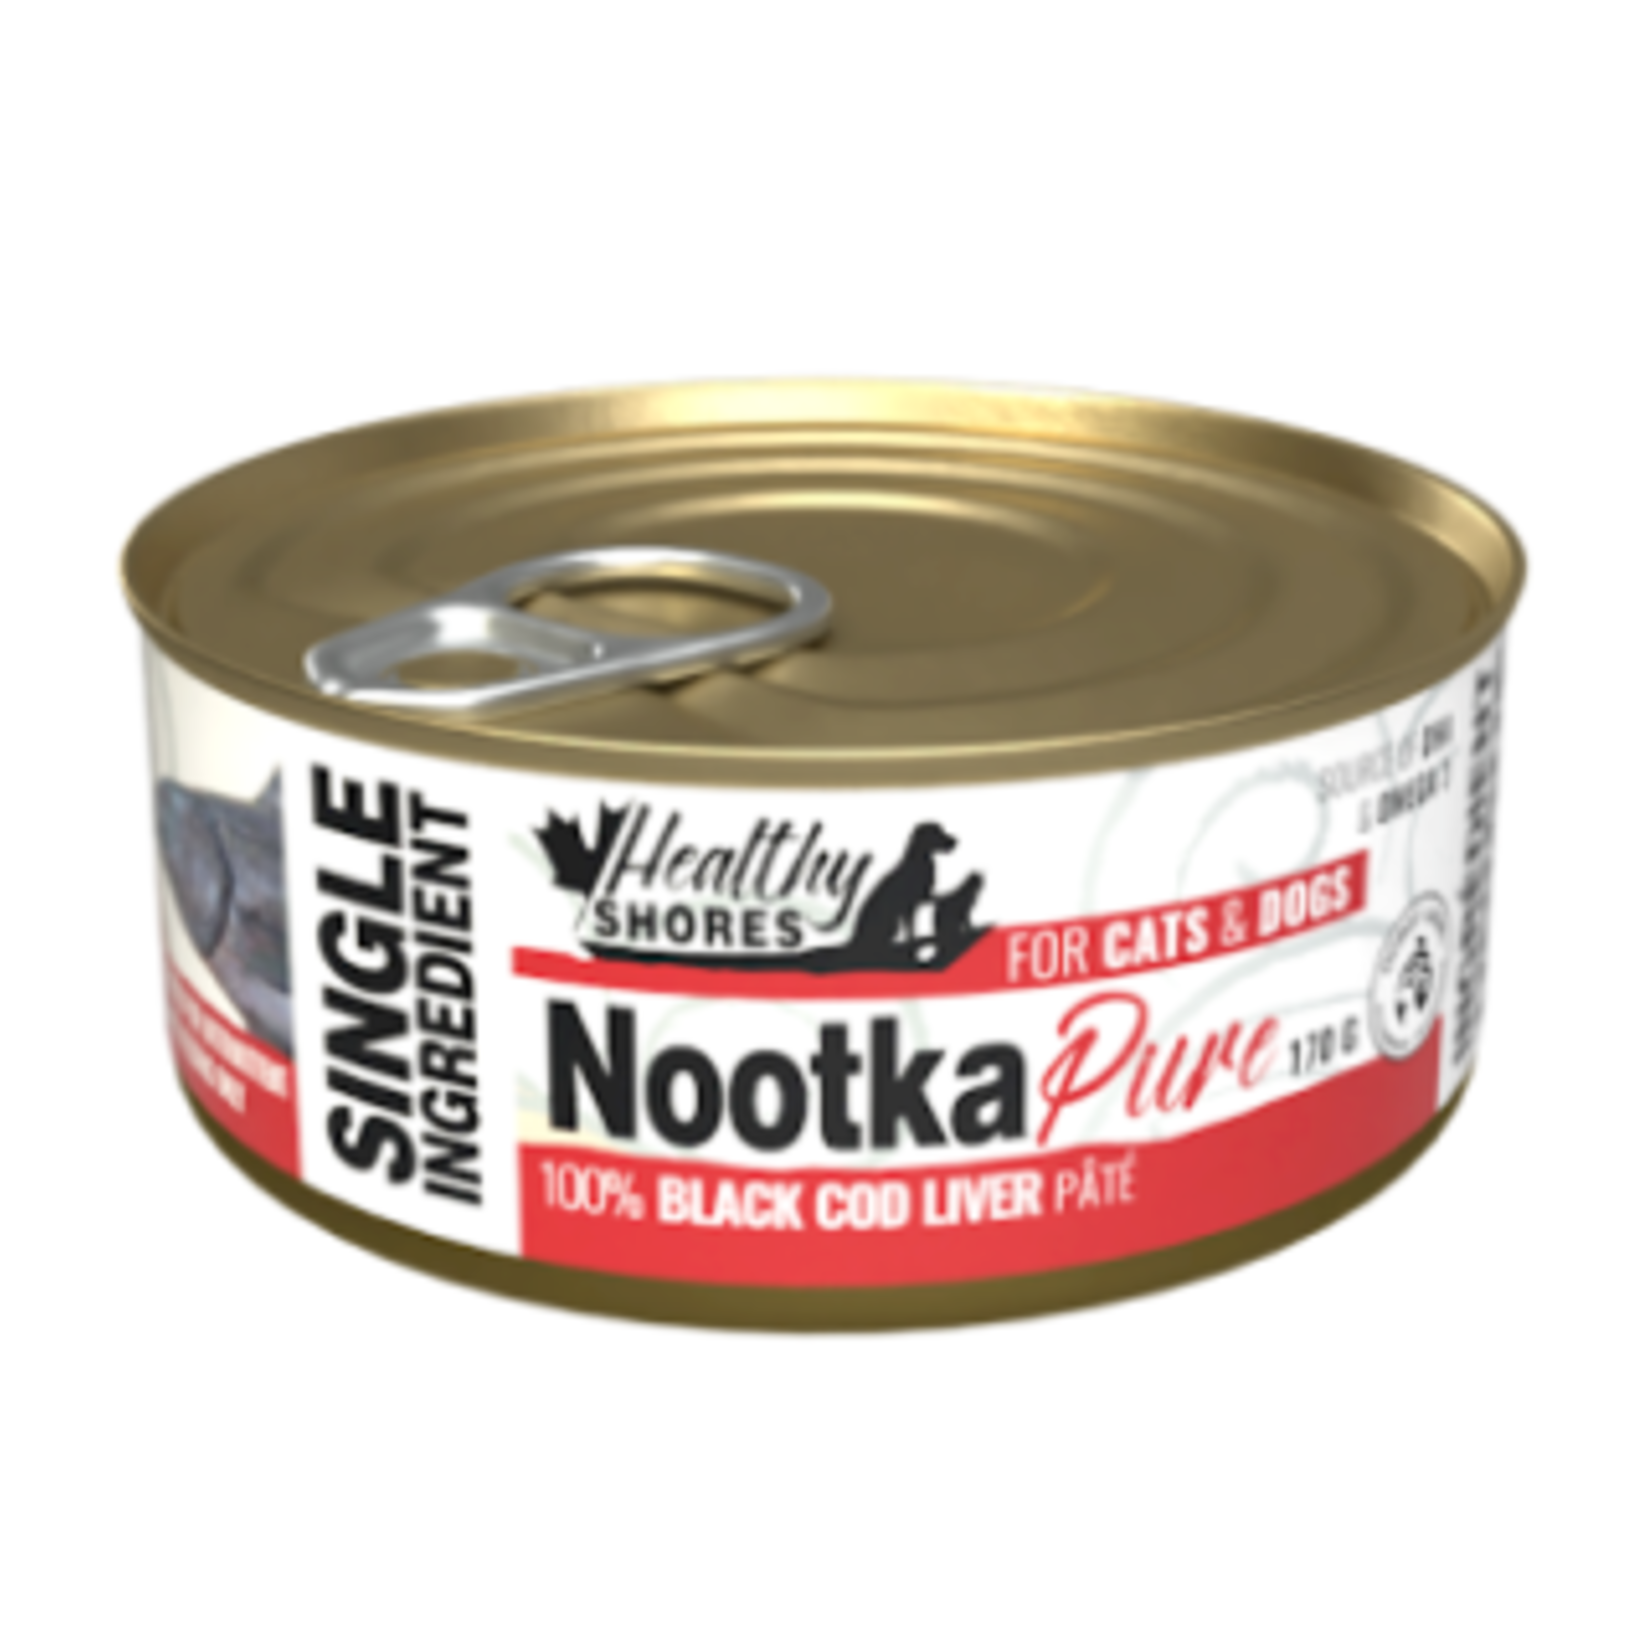 Healthy Shore Nootka Pure - Black Cod Livers( pate) - 100 g